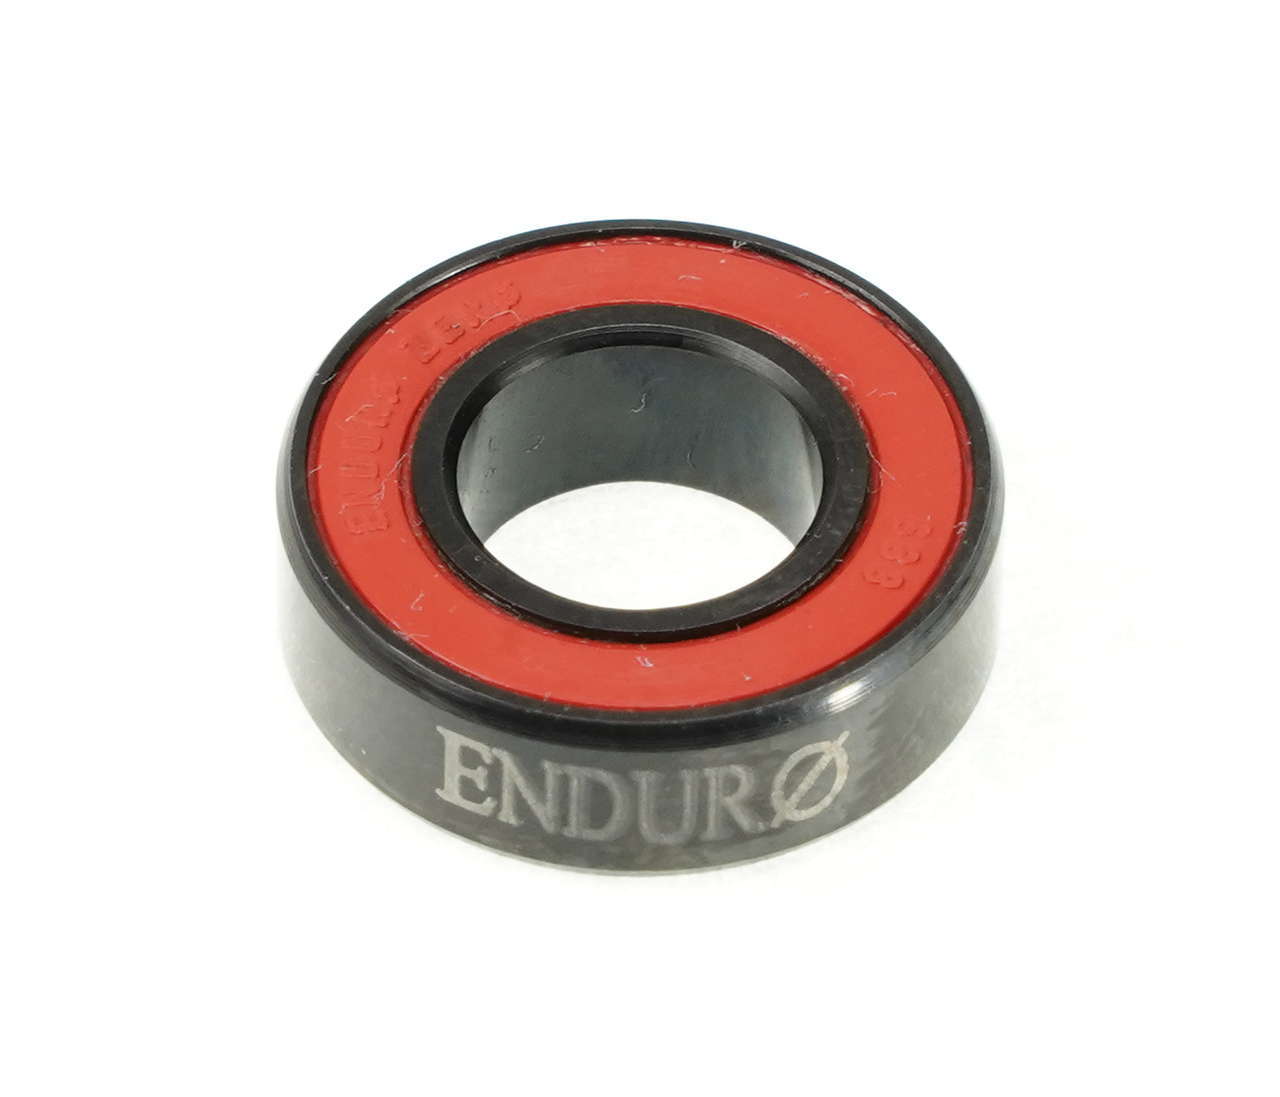 Enduro CO 688 VV - Enduro Zero, Black-Oxide, Ceramic Hybrid, ABEC-5, Radial Bearing (C3 Clearance) - 8mm x 16mm x 5mm